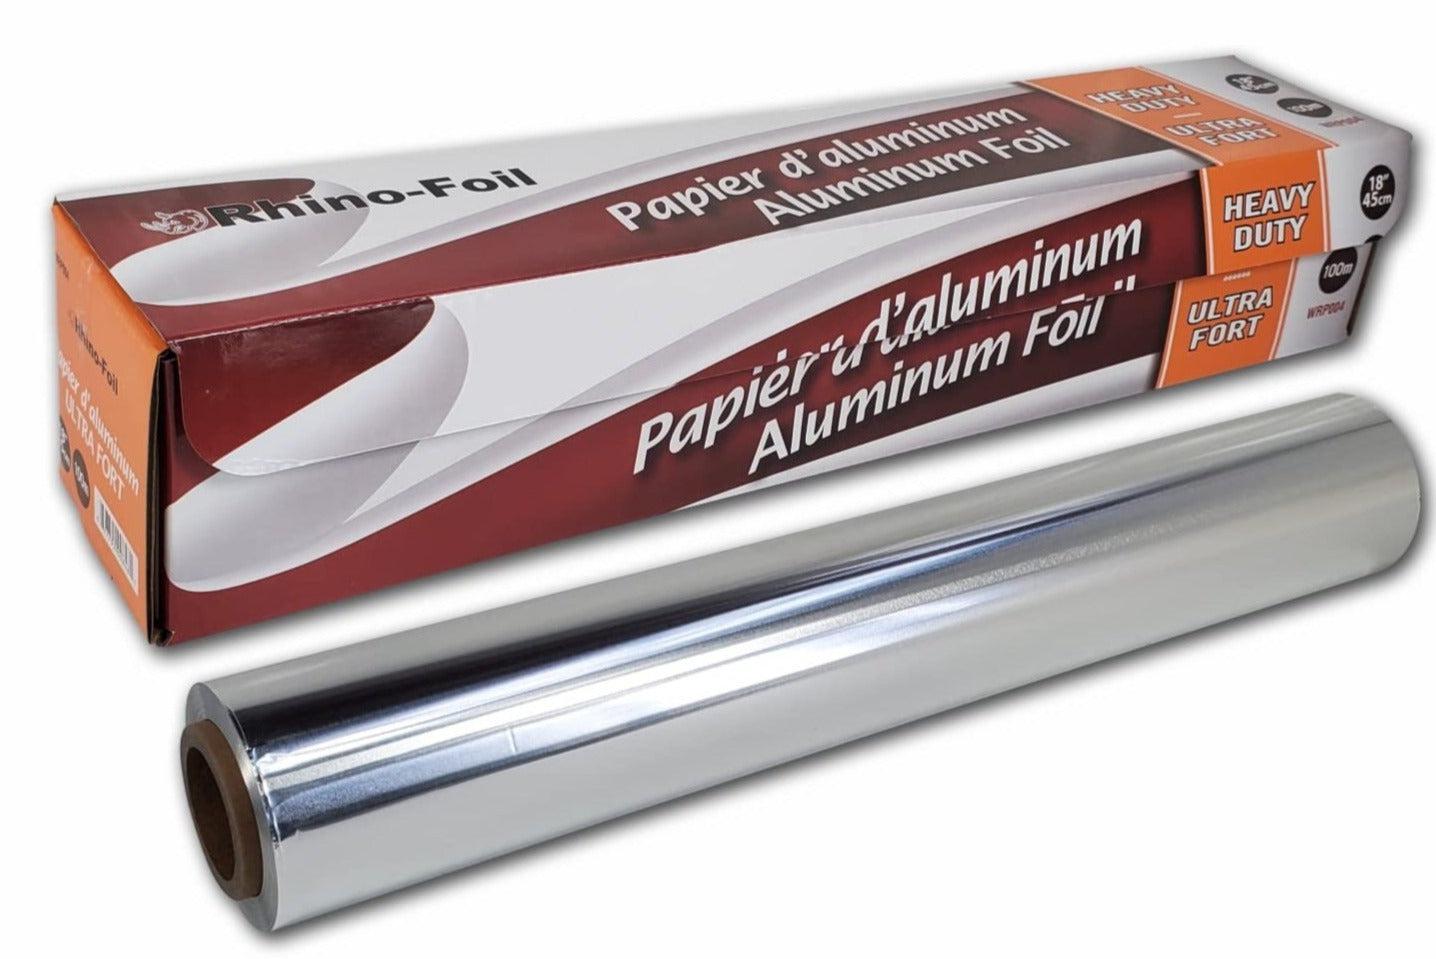 Rhino Aluminum Heavy Duty Aluminum Foil